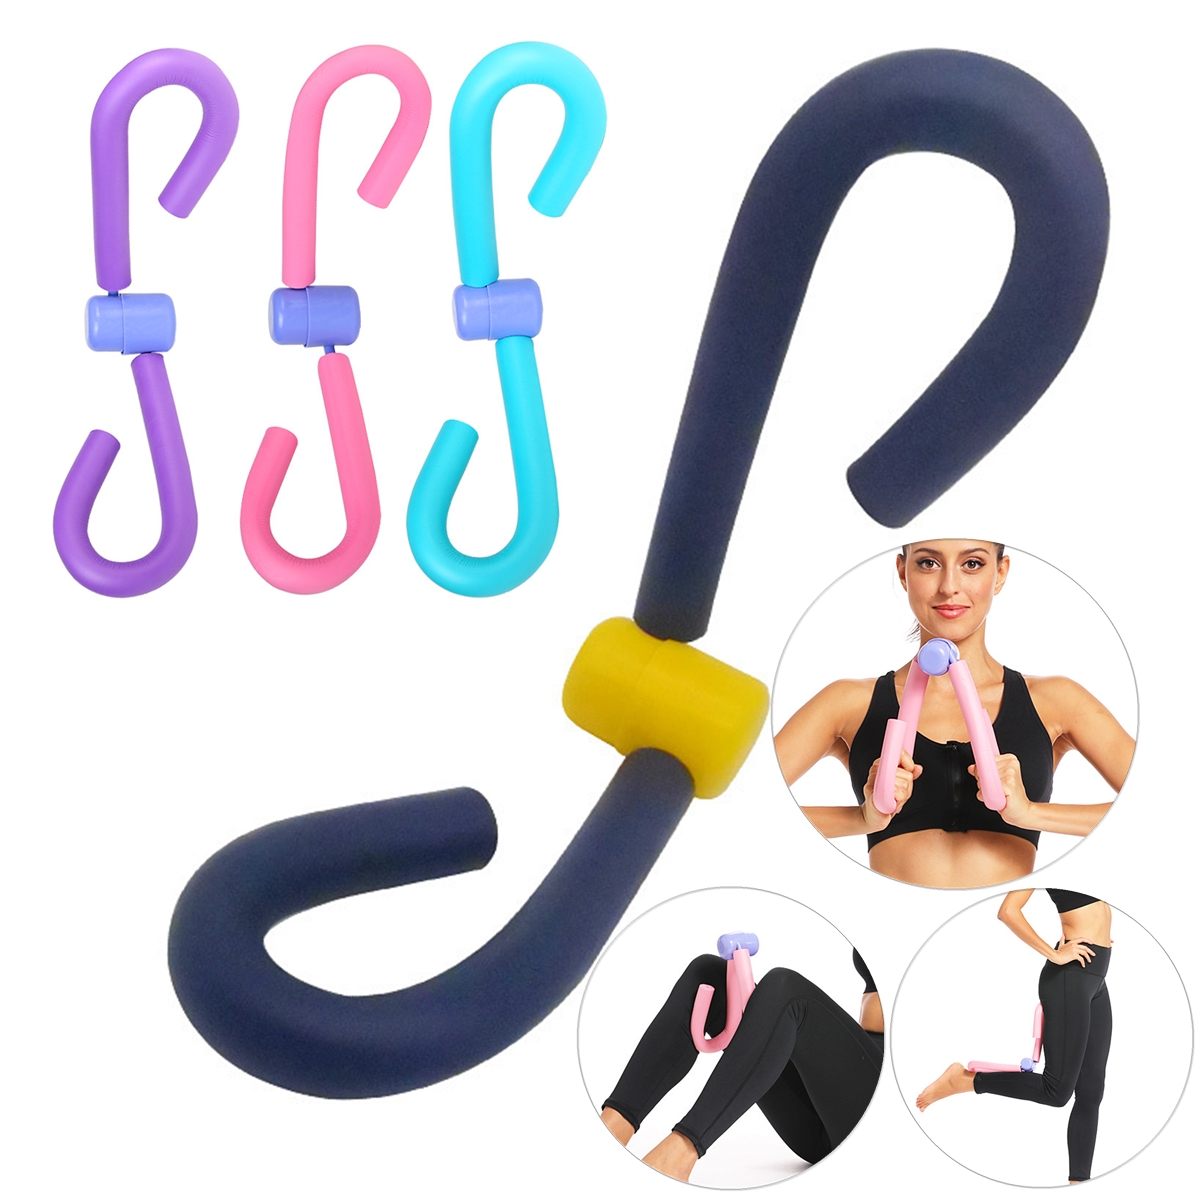 Yoga-Thigh-Master-Thigh-Trimmer-Thin-Body-Legs-Exerciser-Butt-Arm-Toner-Gym-Home-Fitness-Equipment-1781149-1